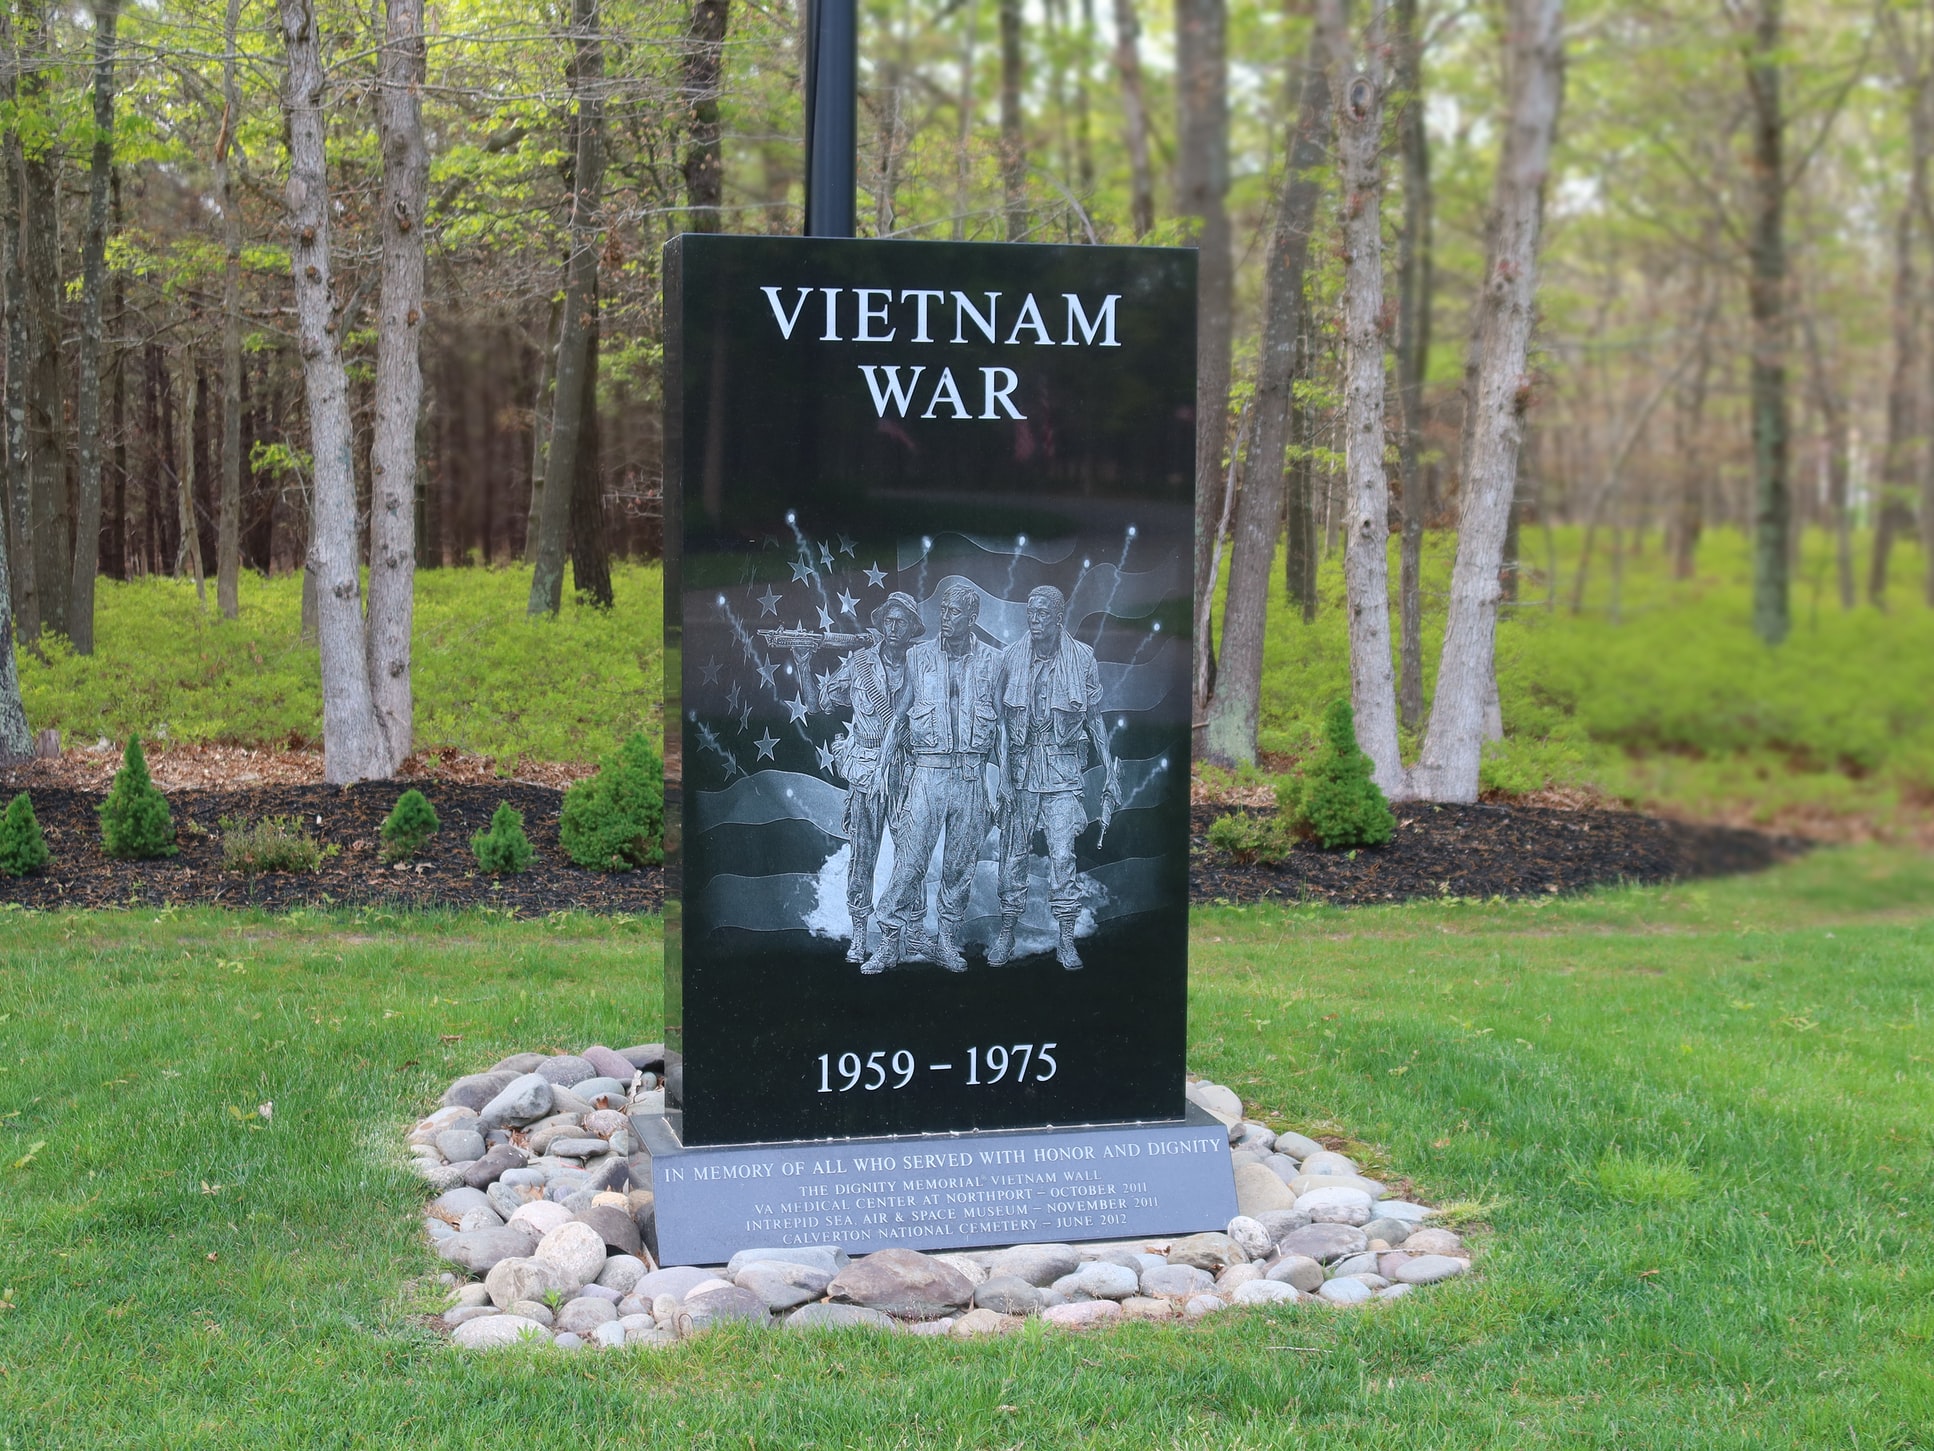 Local memorial to those lost In Vietnam War